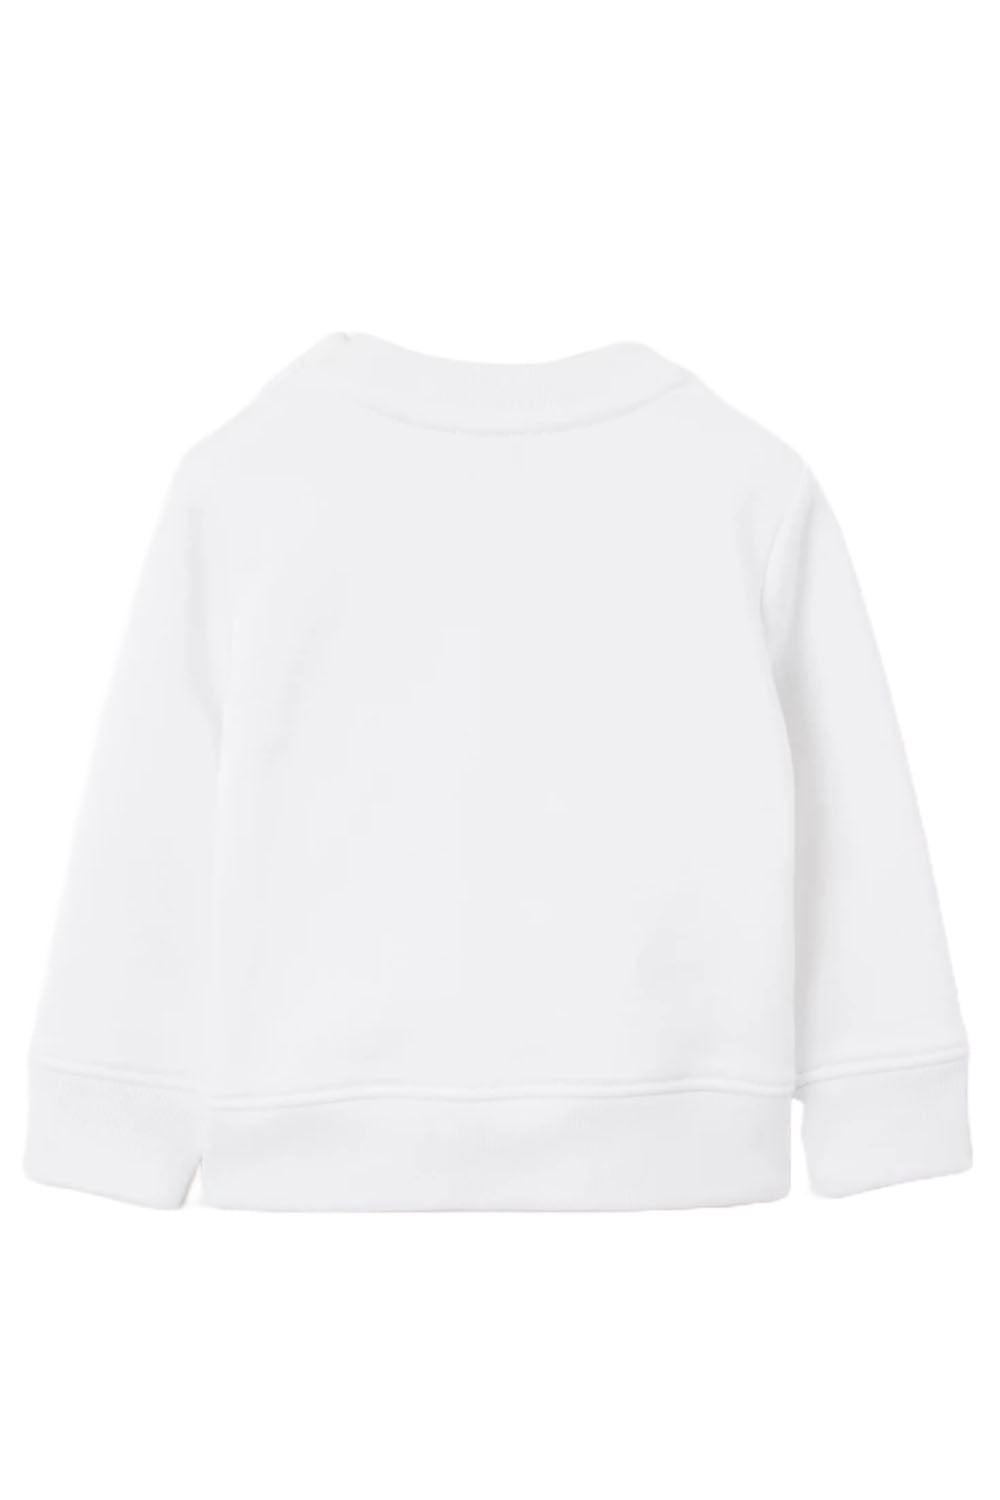 Thomas Bear Print Cotton Sweatshirt Baby for Boys - Maison7